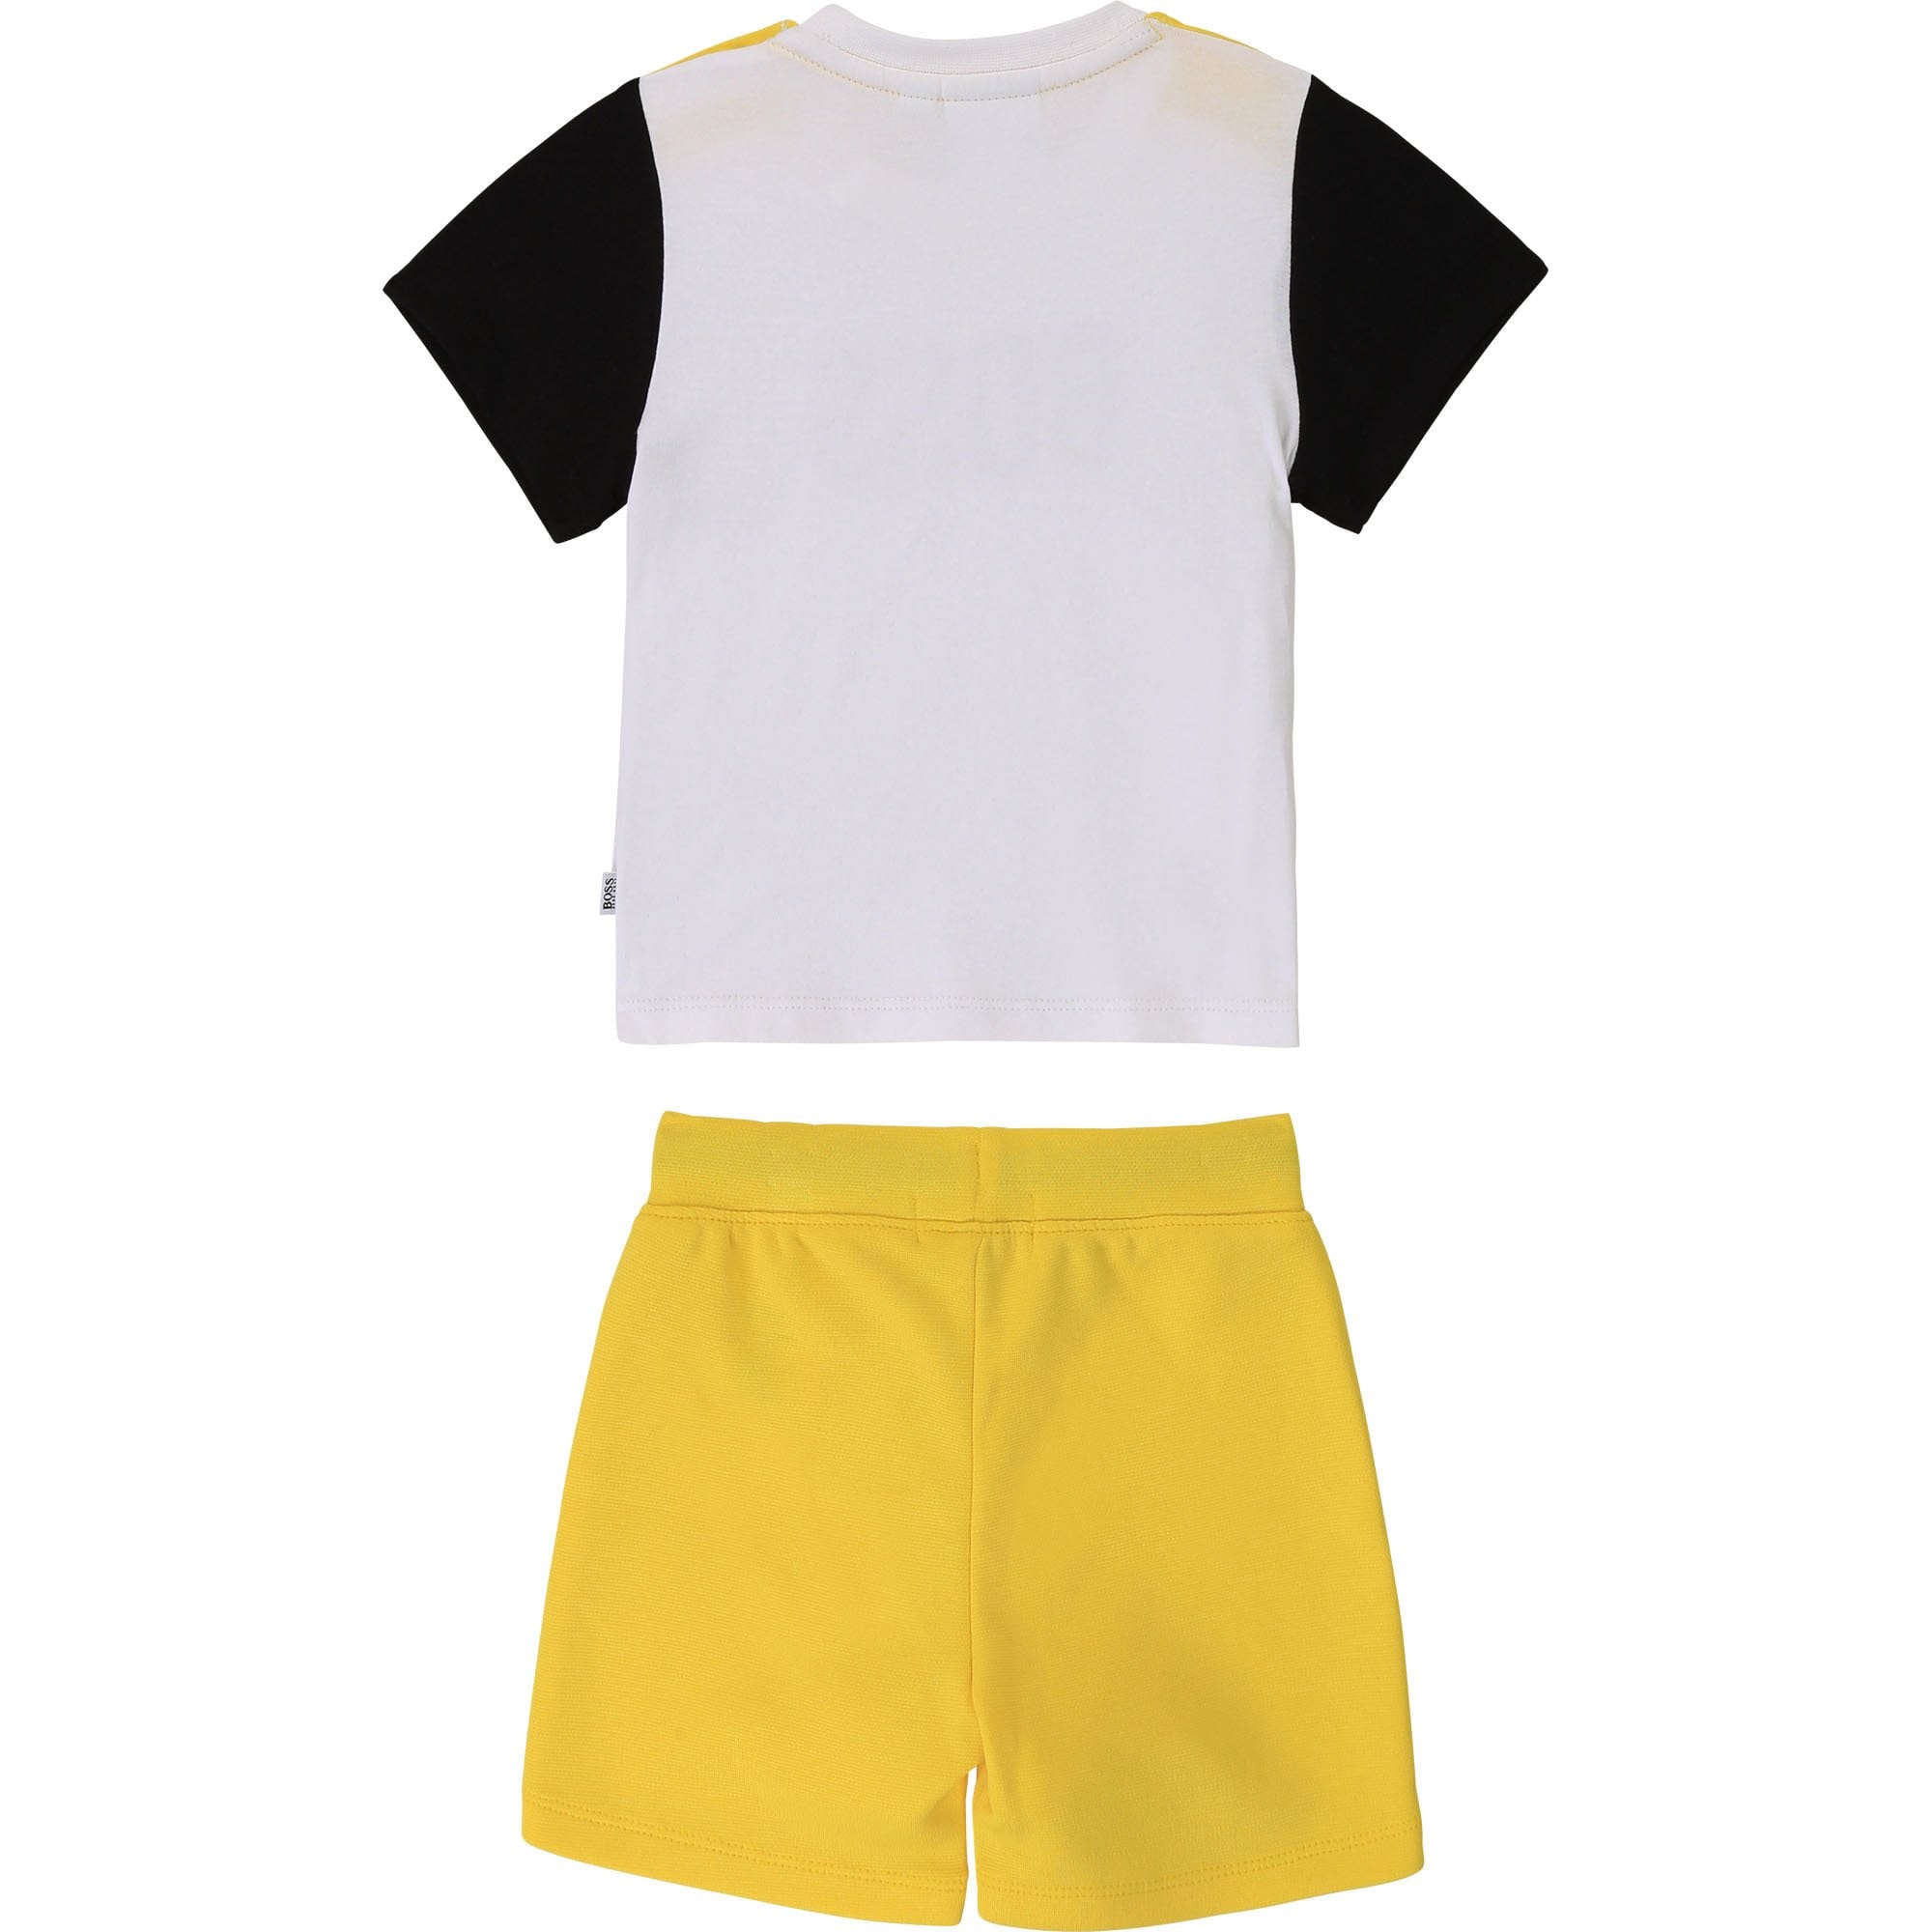 Hugo Boss Boys T-shirt And Shorts 2 Piece Set White & Yellow Years